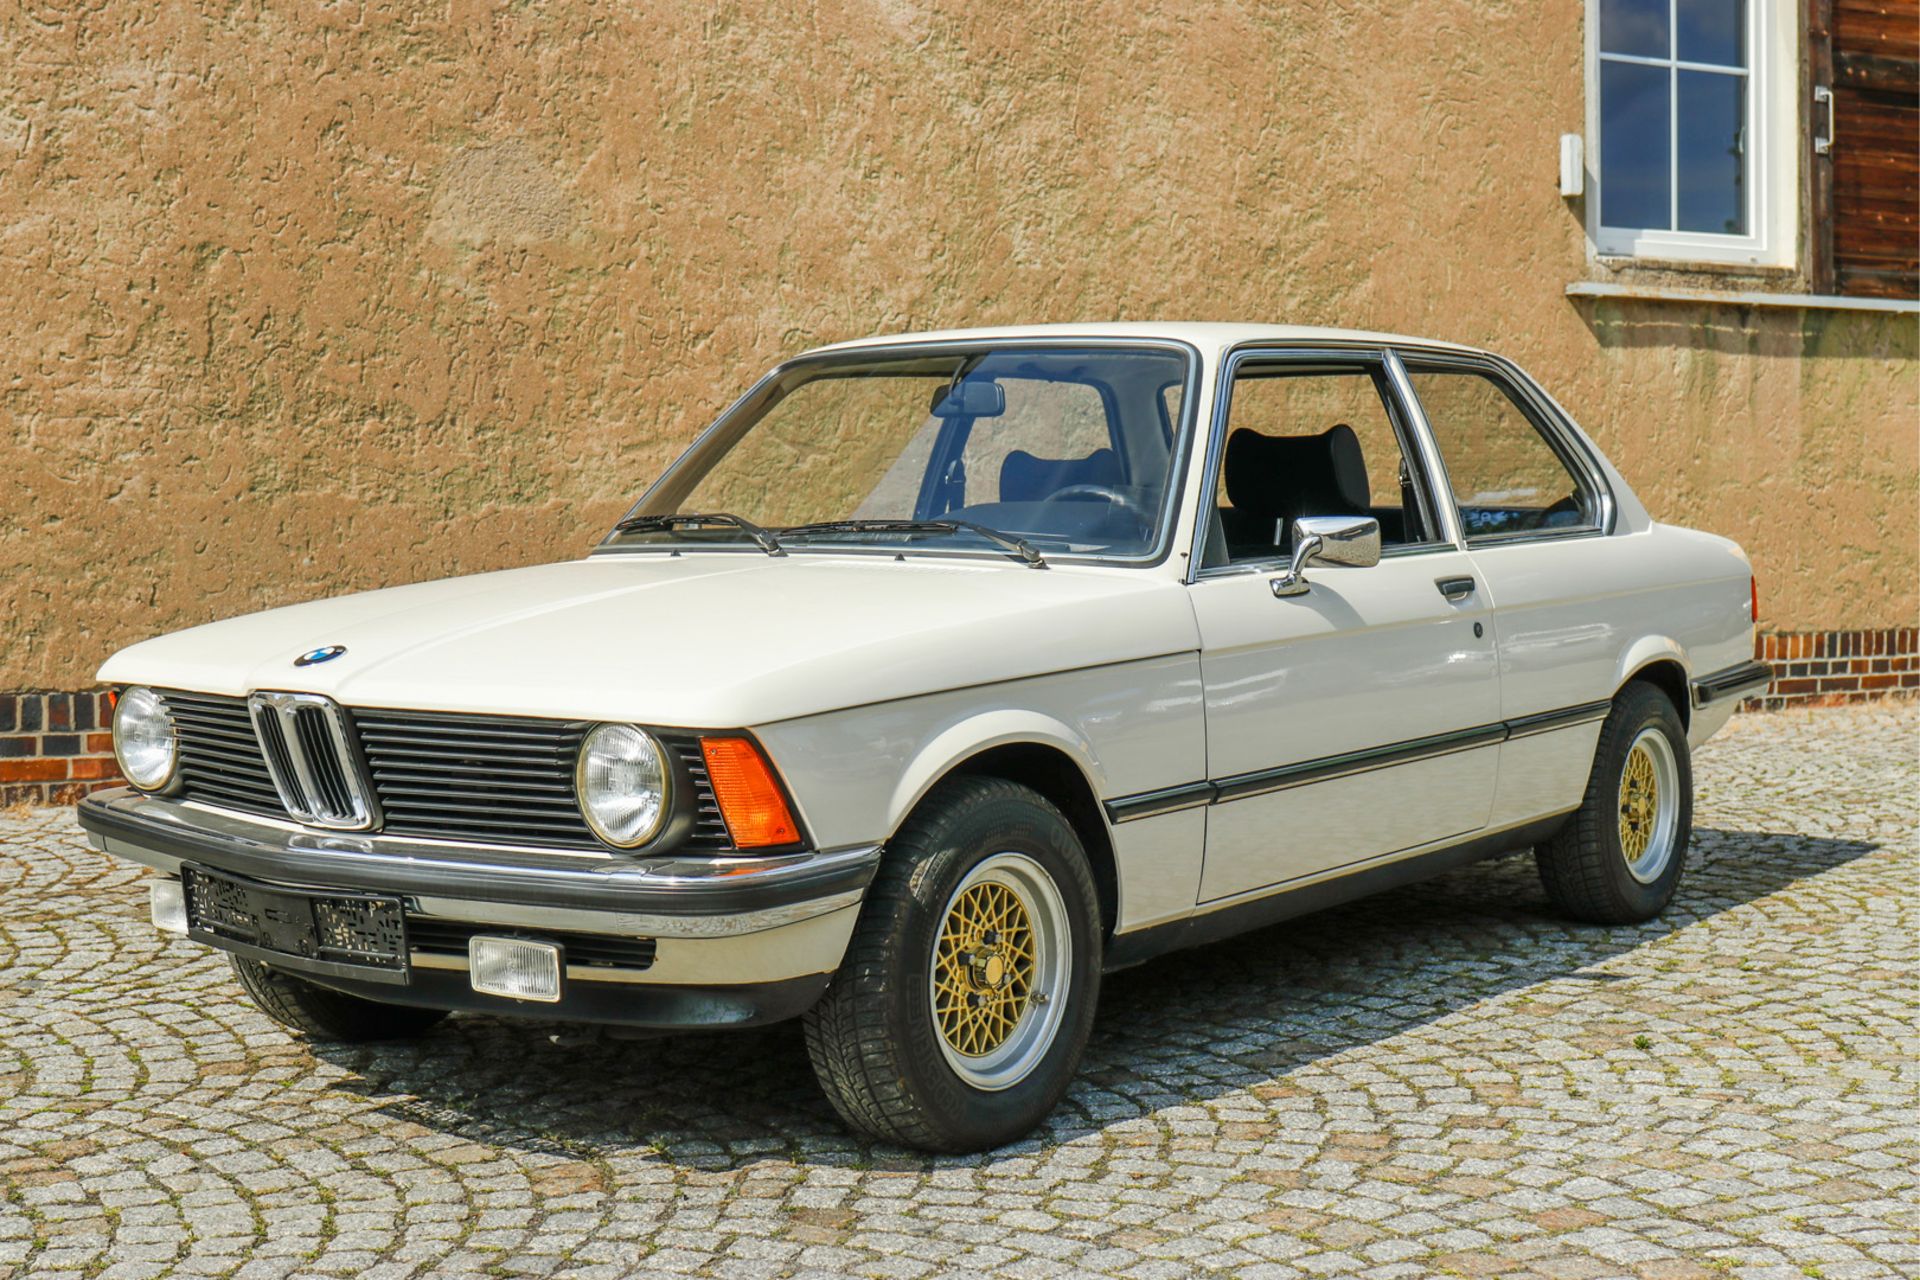 BMW 318/E 21 Baujahr: 21.09.1978, 4 Zylinder, 1766 ccm, 98 PS/5800, Automatik. 1. Hand, 56478